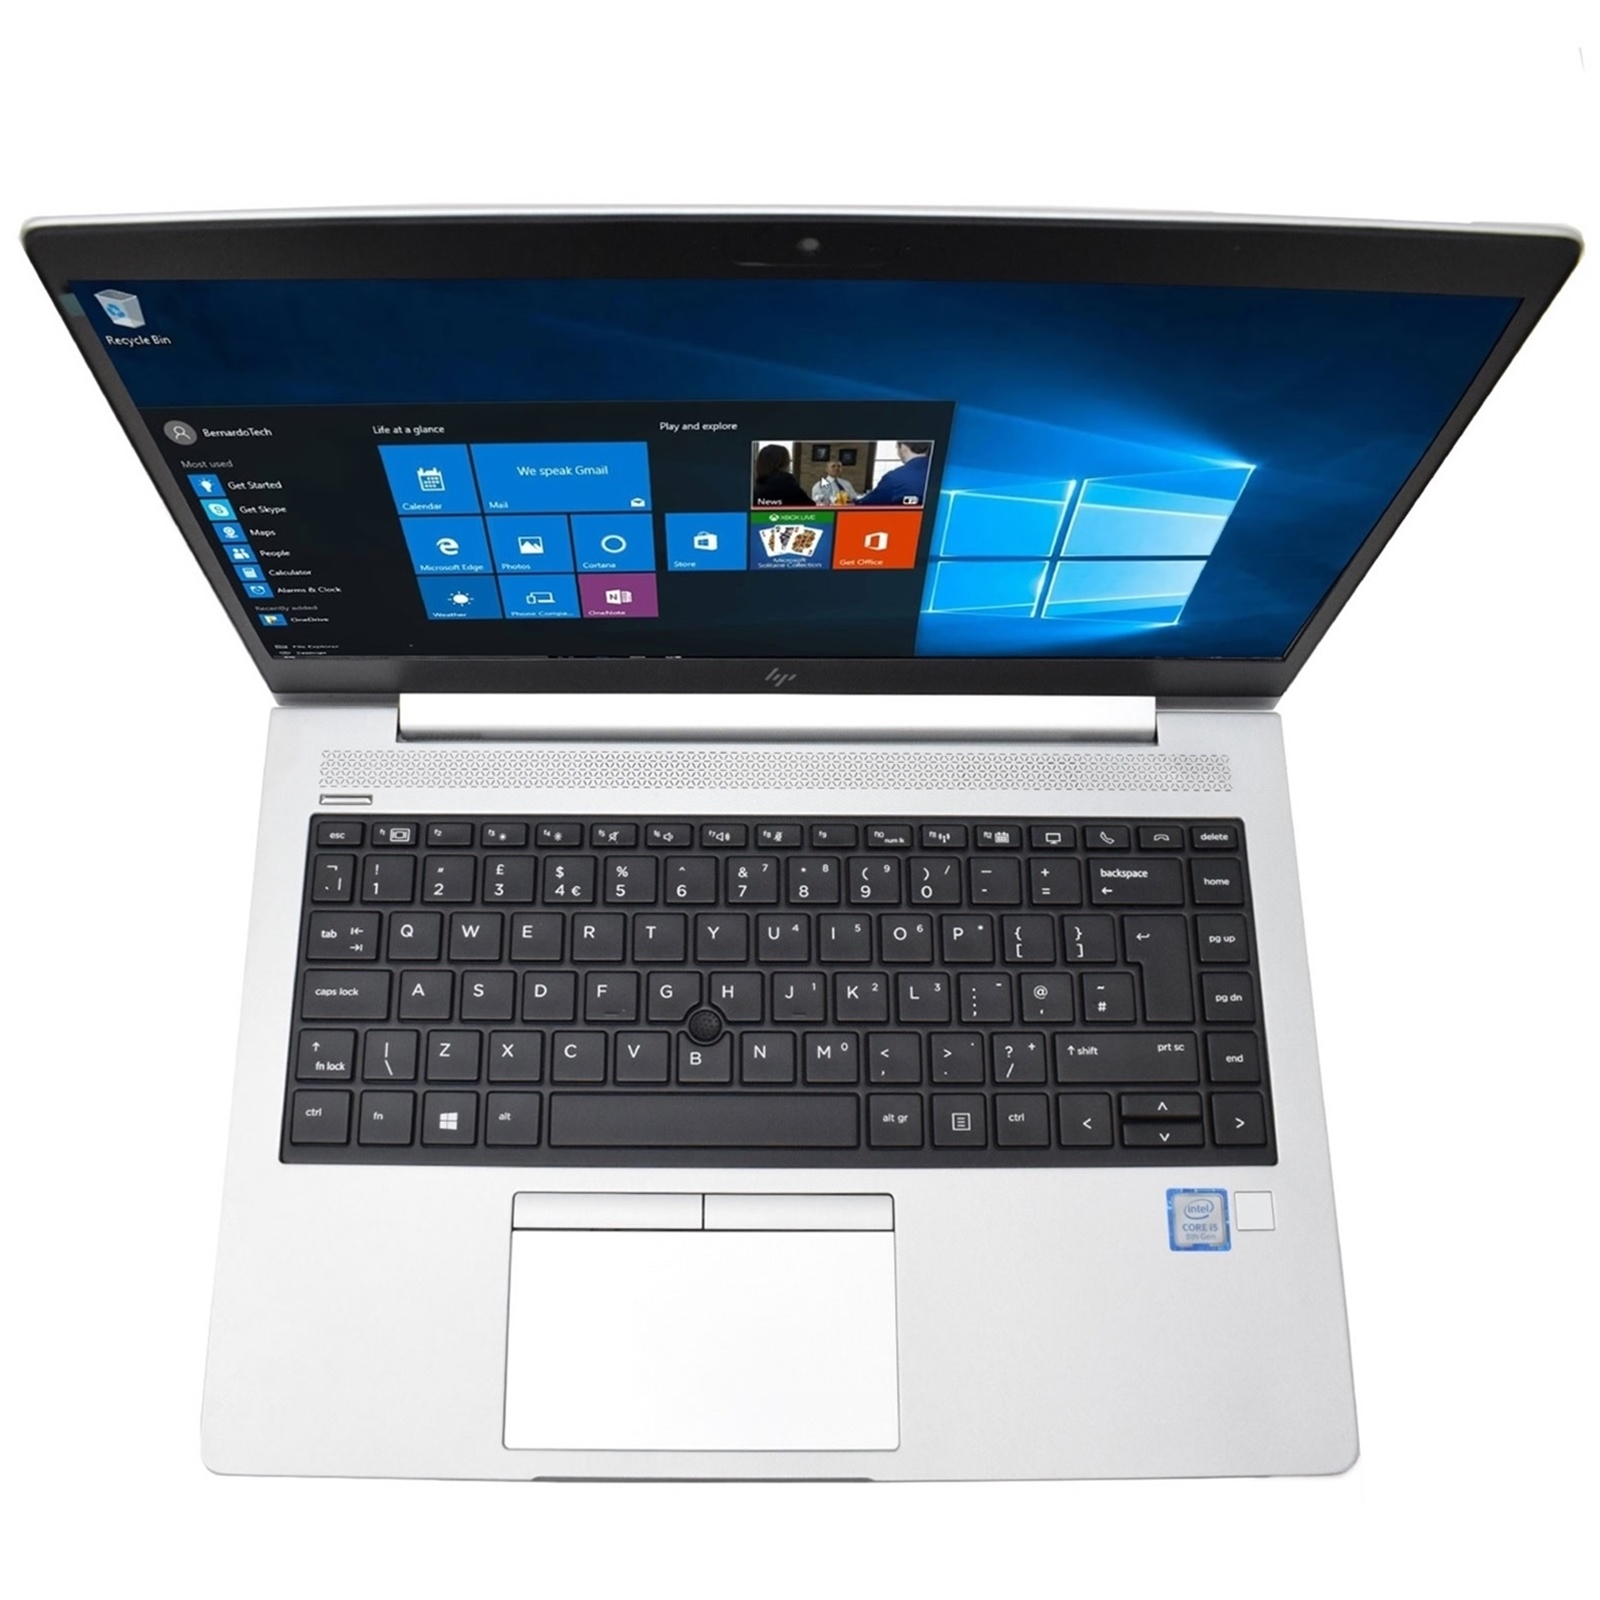 PREMIUM REFURBISHED HP EliteBook 840 G6 Intel Core i5 8th Gen Laptop, 14 Inch Full HD 1080p Screen, 16GB RAM, 512GB SSD, Windows 10 Pro